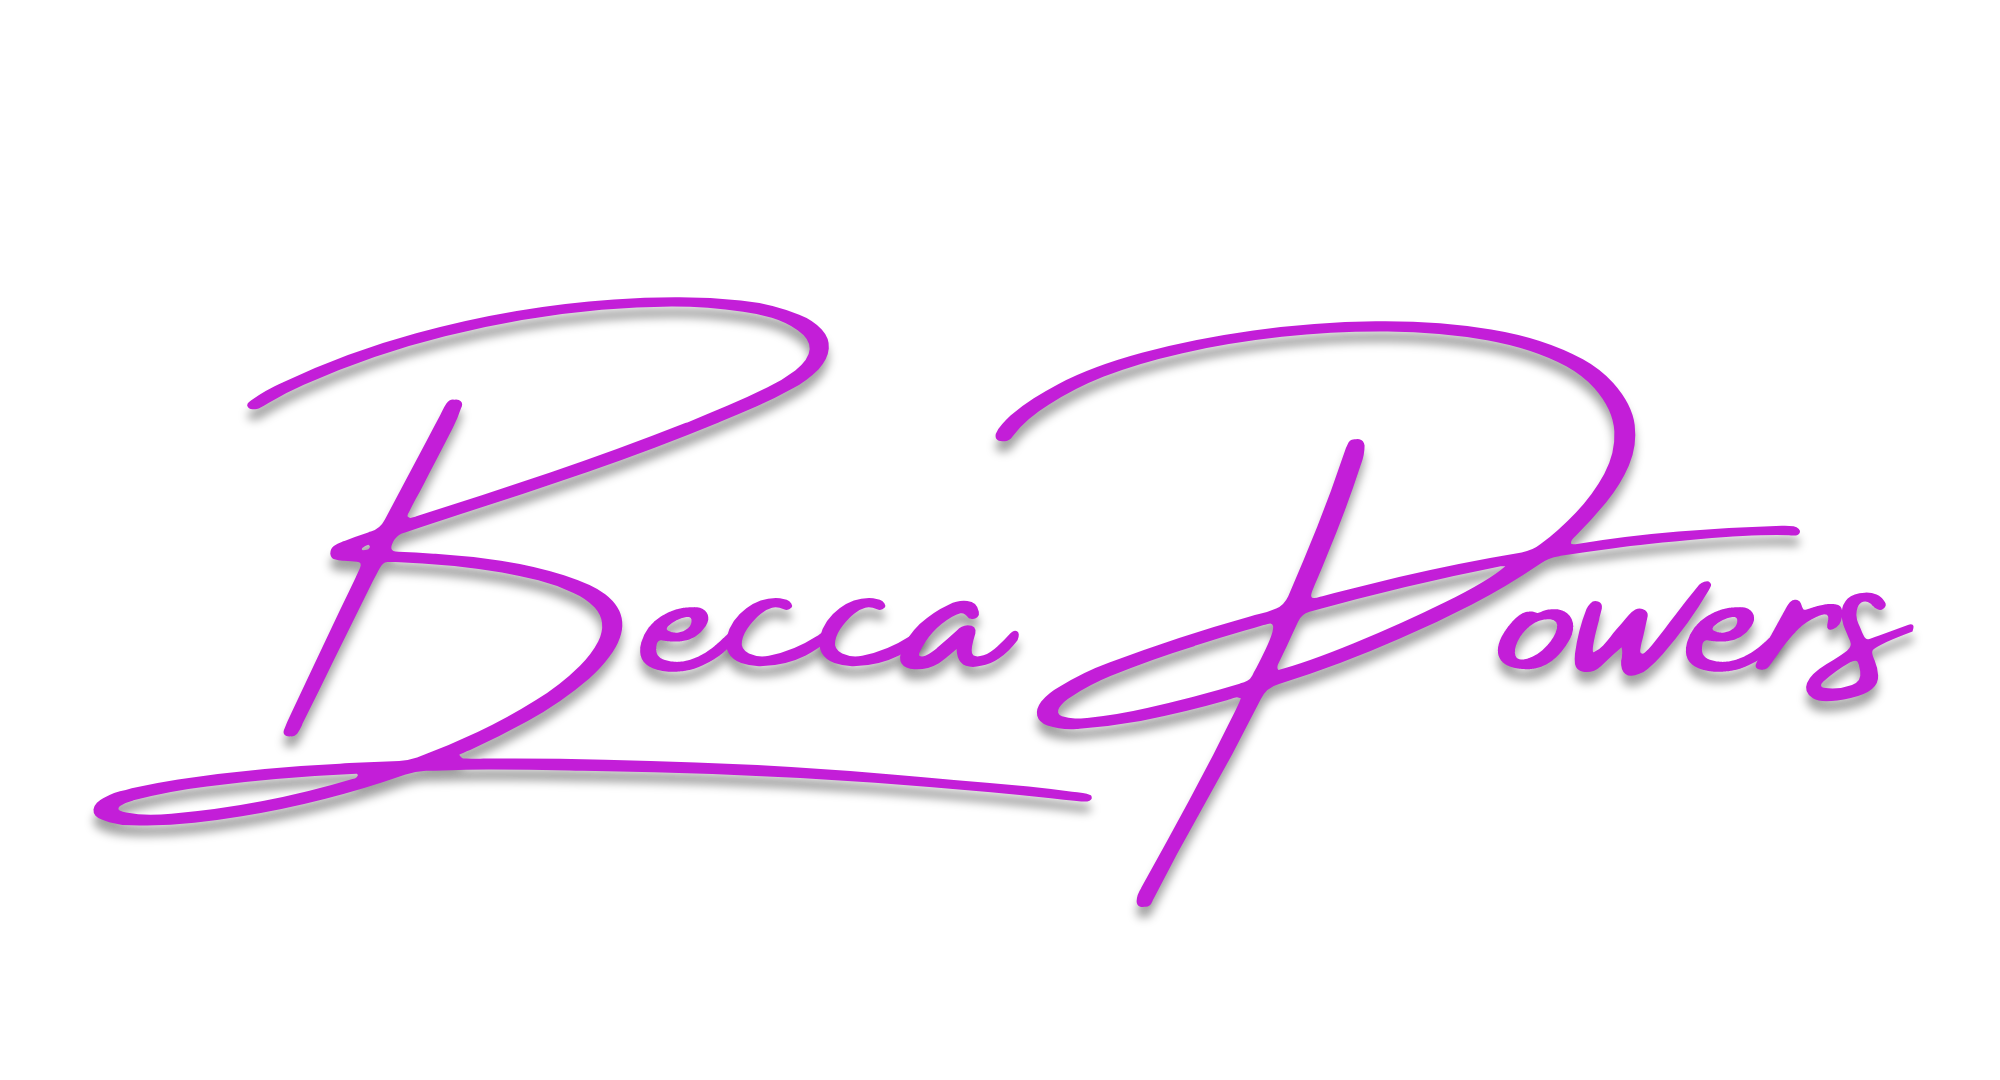 Becca Powers